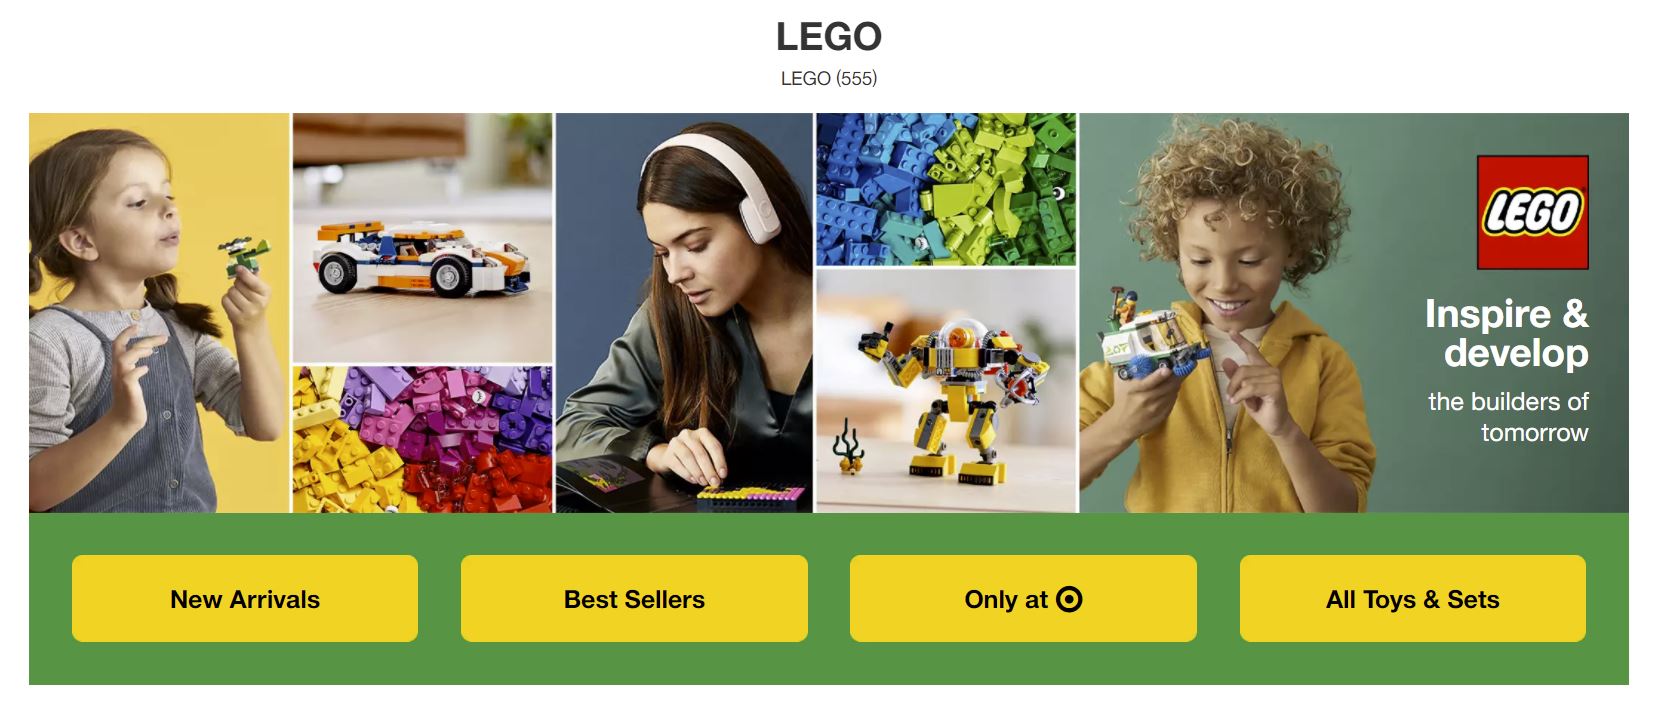 Lego Custom Brand Experience on Target website